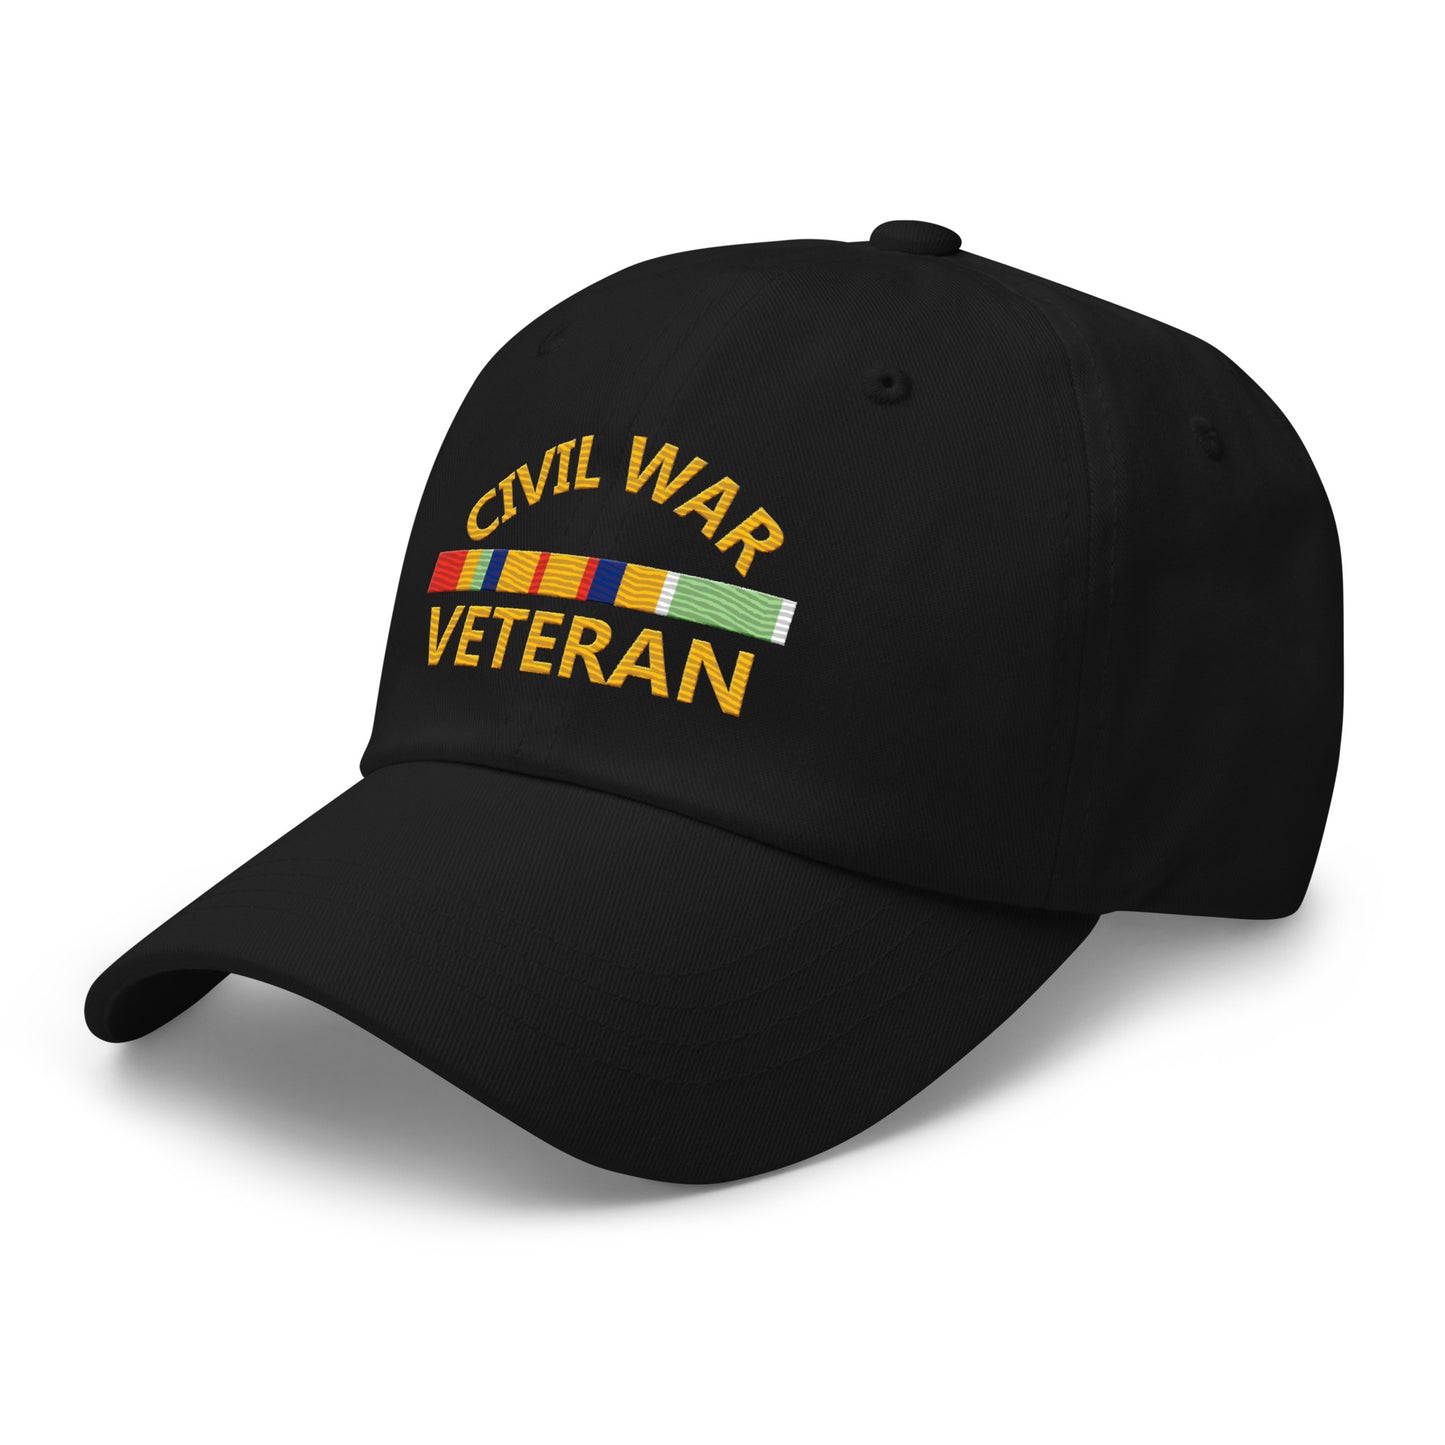 Civil War Black Veteran Joke Hat